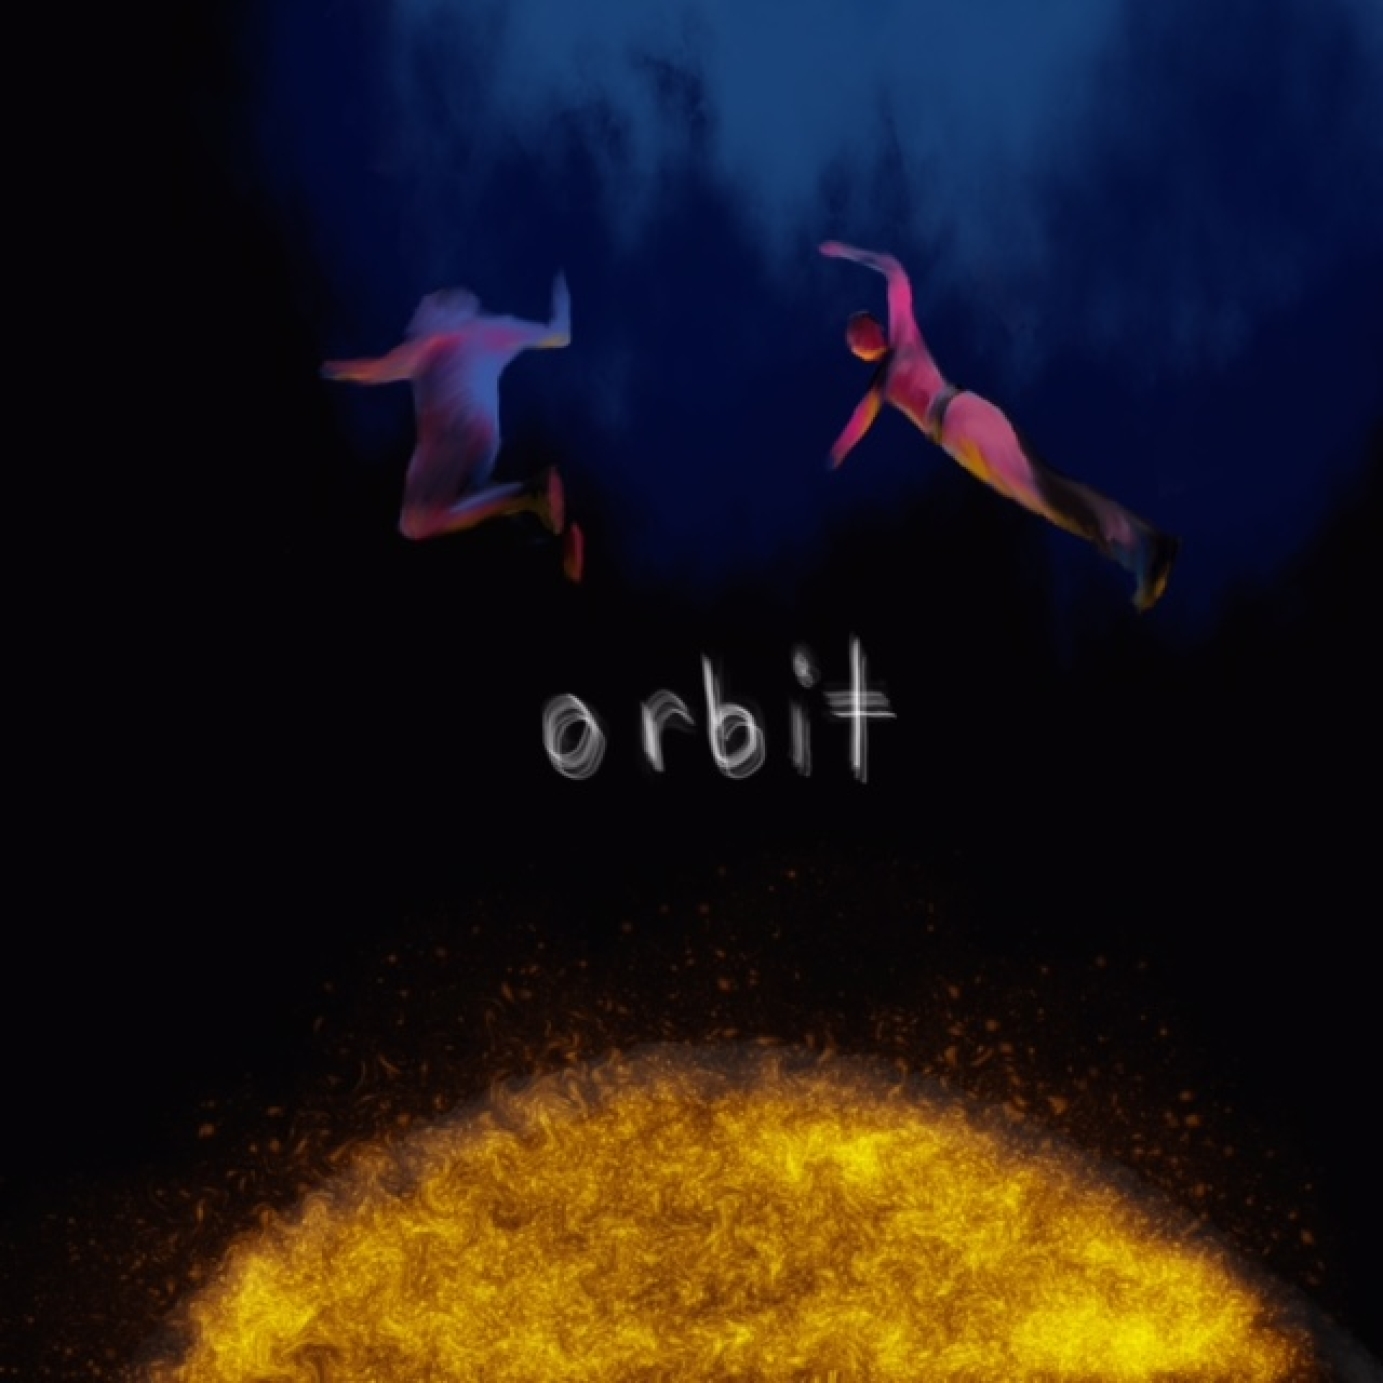 Orbit Single cover design